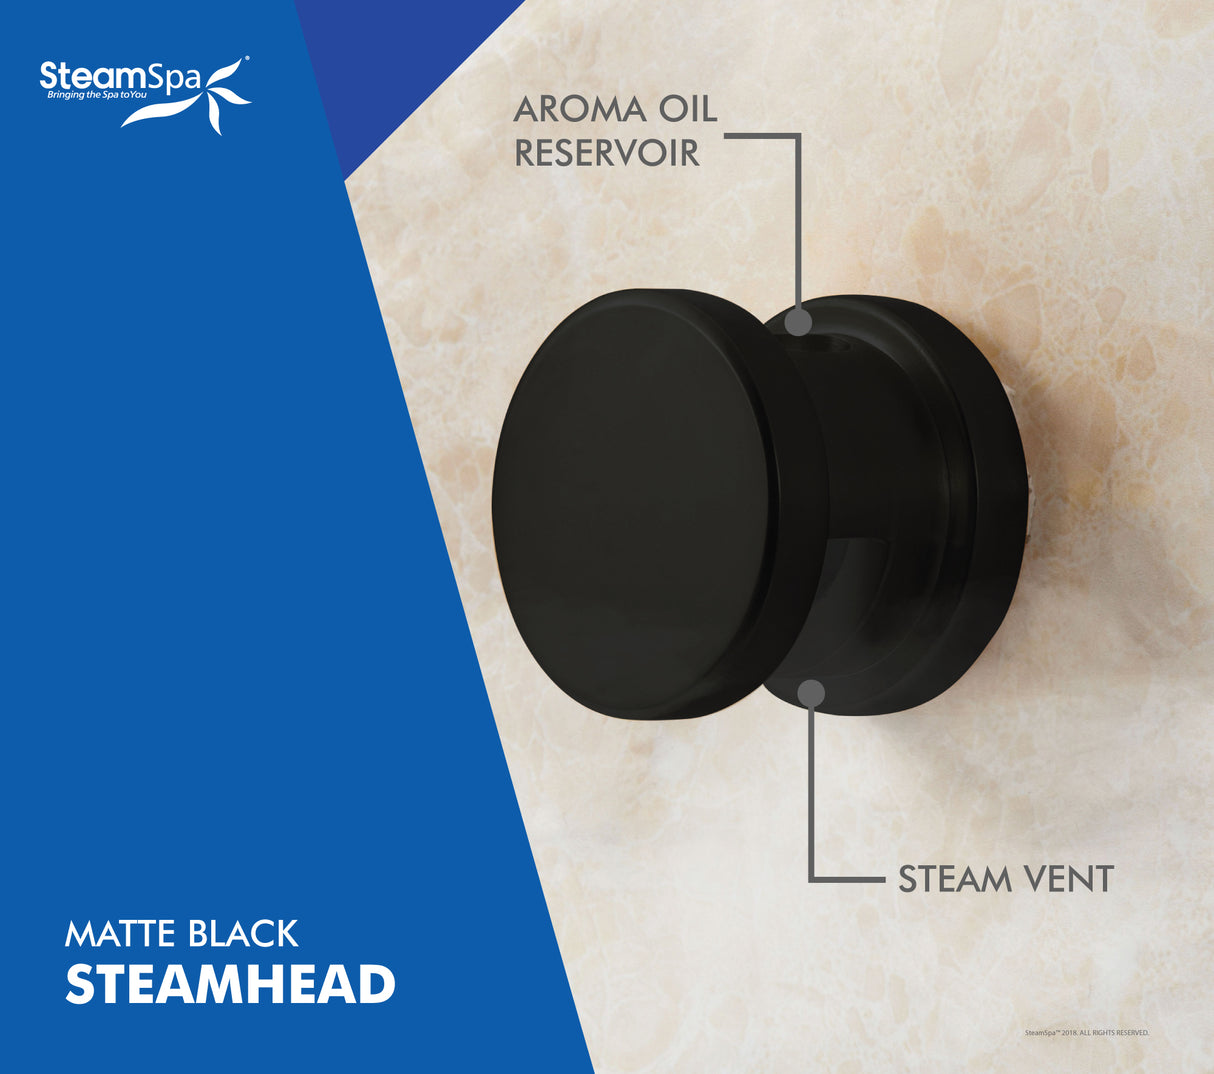 SteamSpa Oasis 6 KW QuickStart Acu-Steam Bath Generator Package with Built-in Auto Drain in Matte Black OA600MK-A